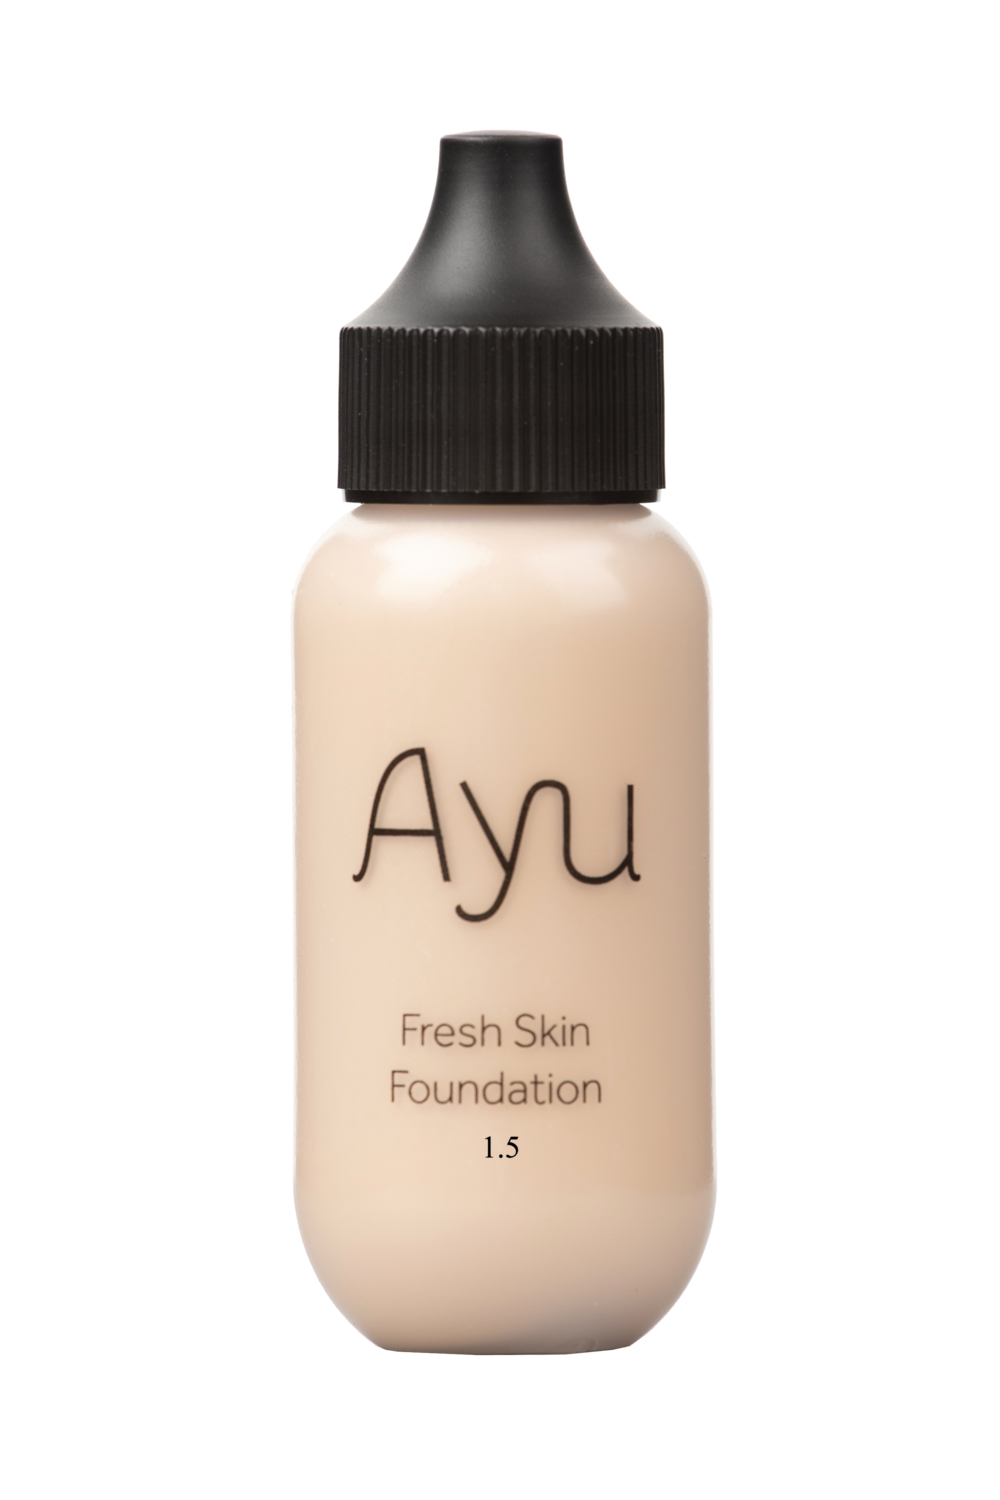 Ayu Fresh Skin Foundation shade 1.530ml New Formula 